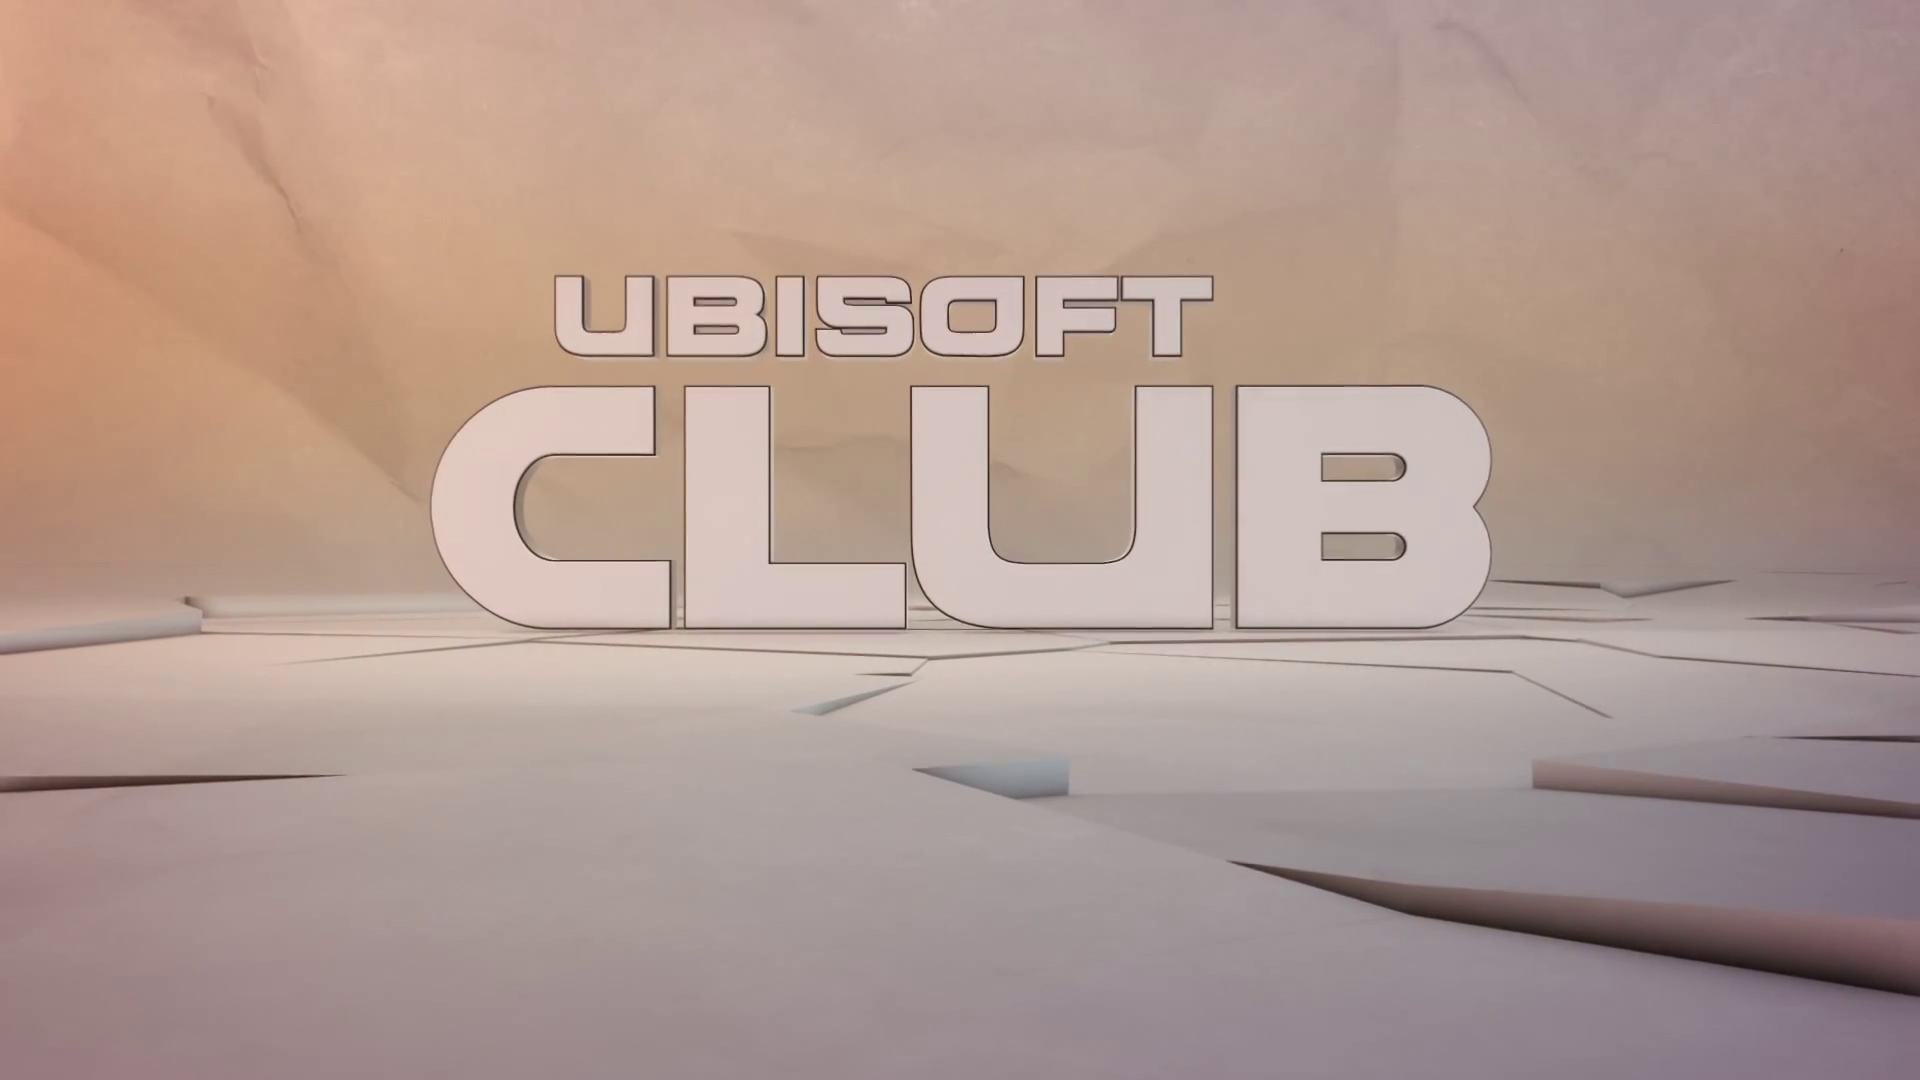 Ubisoft club. Юбисофт. Юбисофт клаб. Логотип юбисофт. Шрифт юбисофт.